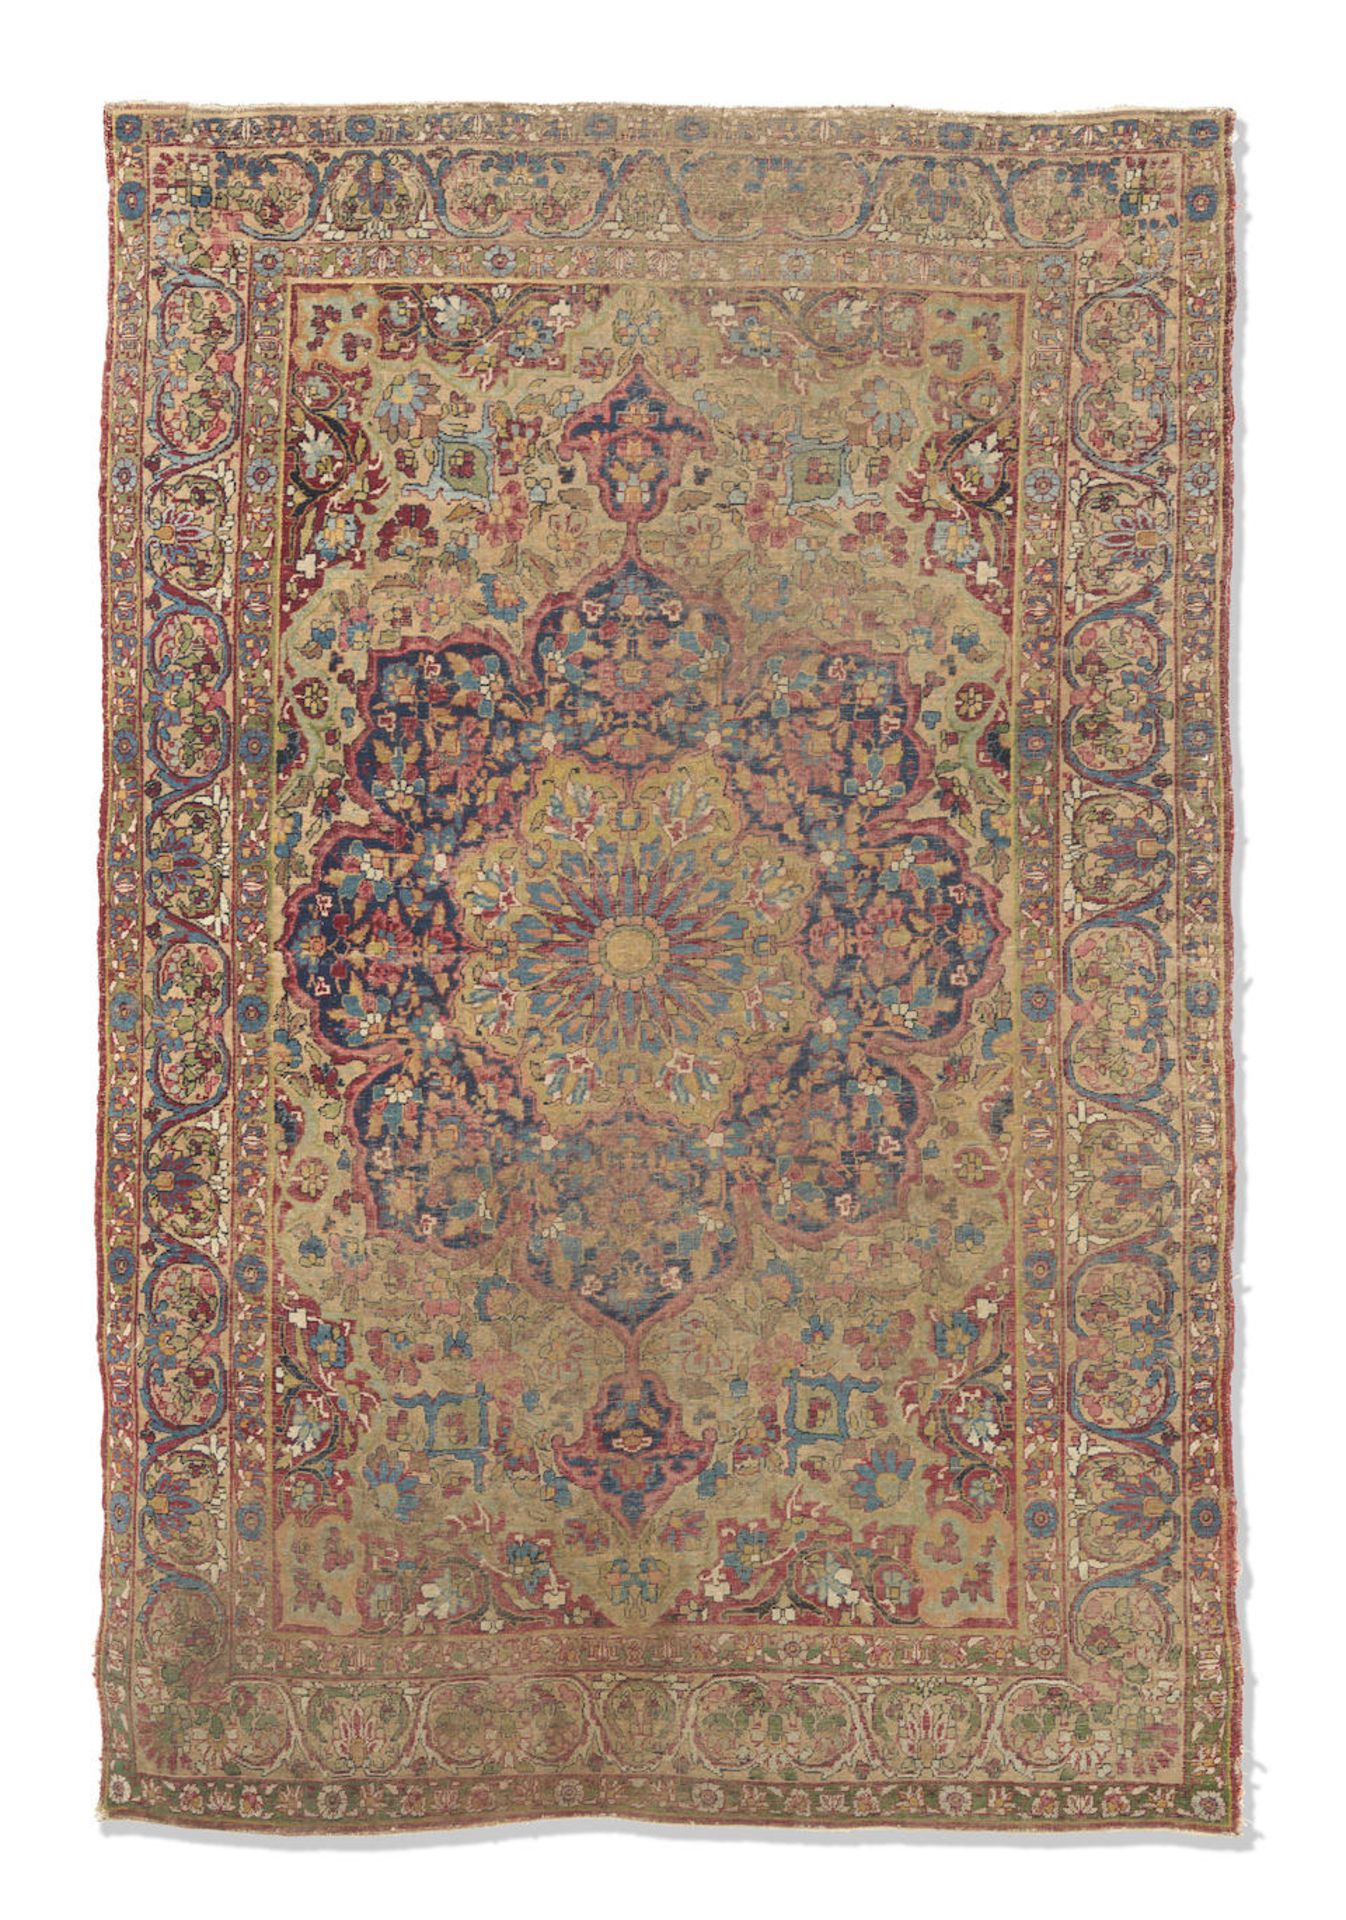 A striking Isfahan carpet North West Persia, 20cm x 132cm